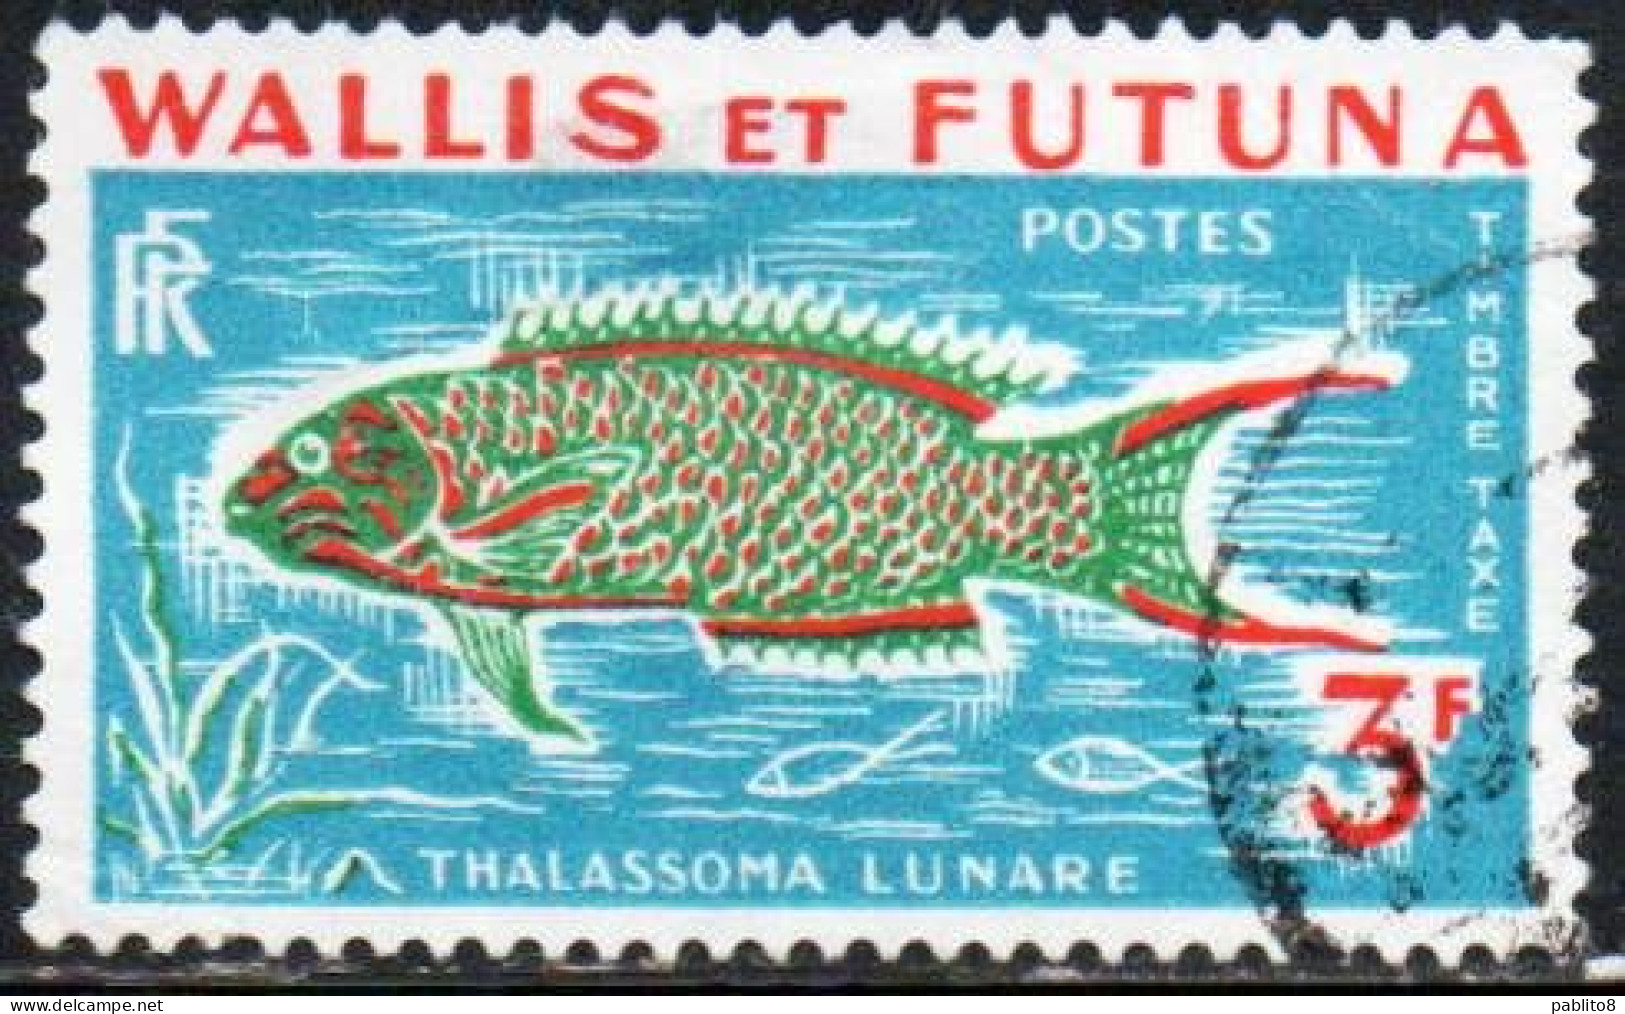 WALLIS AND FUTUNA ISLANDS 1963 POSTAGE DUE STAMPS TAXE SEGNATASSE THALASSOMA LUNARE 3fr USED USATO OBLITERE' - Portomarken